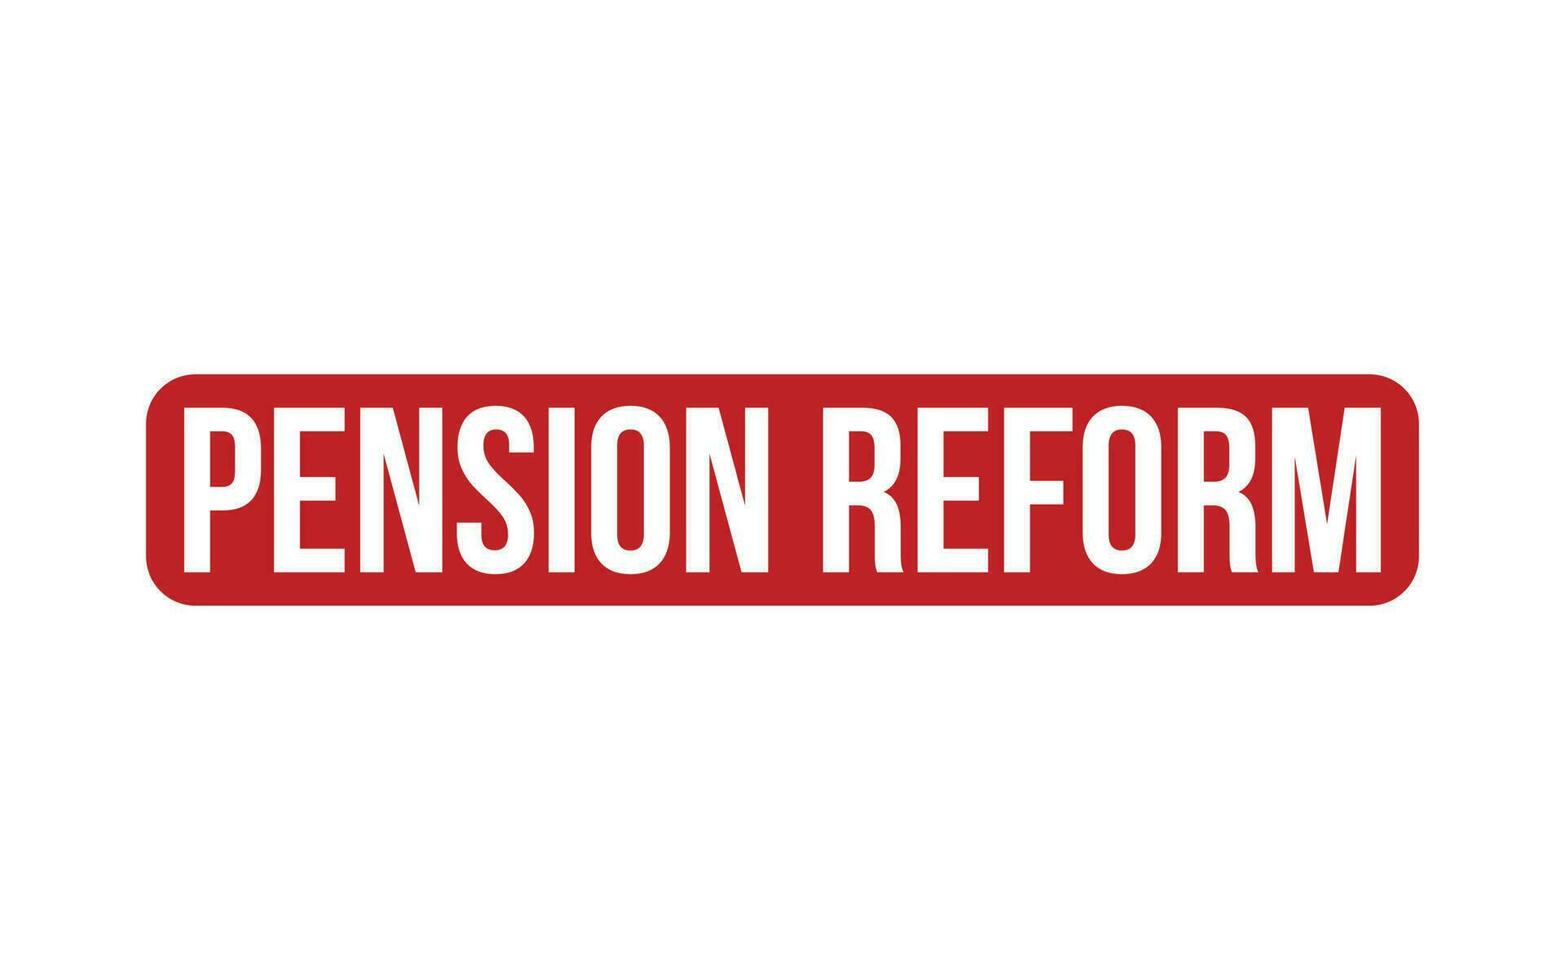 pensão reforma borracha carimbo foca vetor